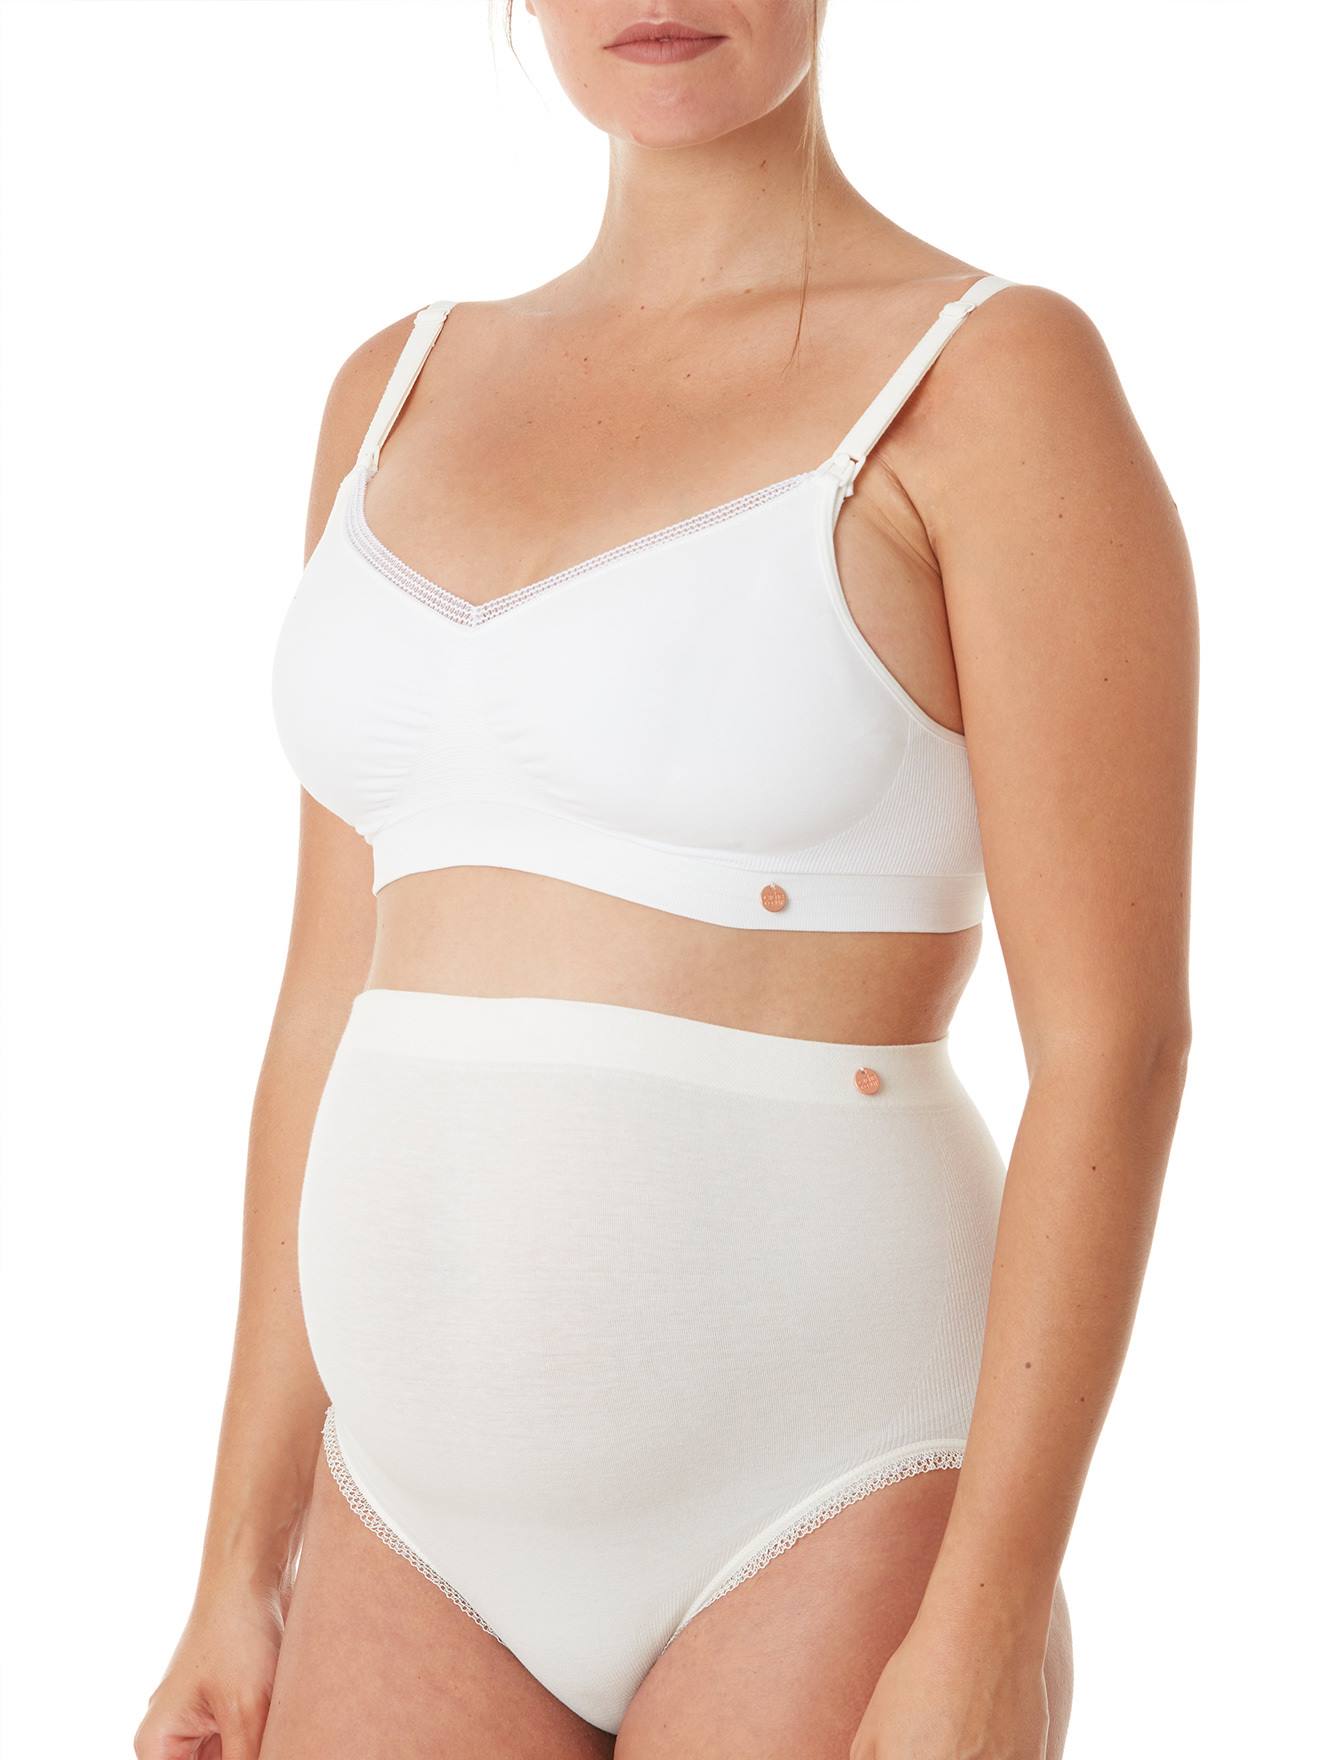 High Waist Thread Maternity Underwear Set Clothes For Pregnant